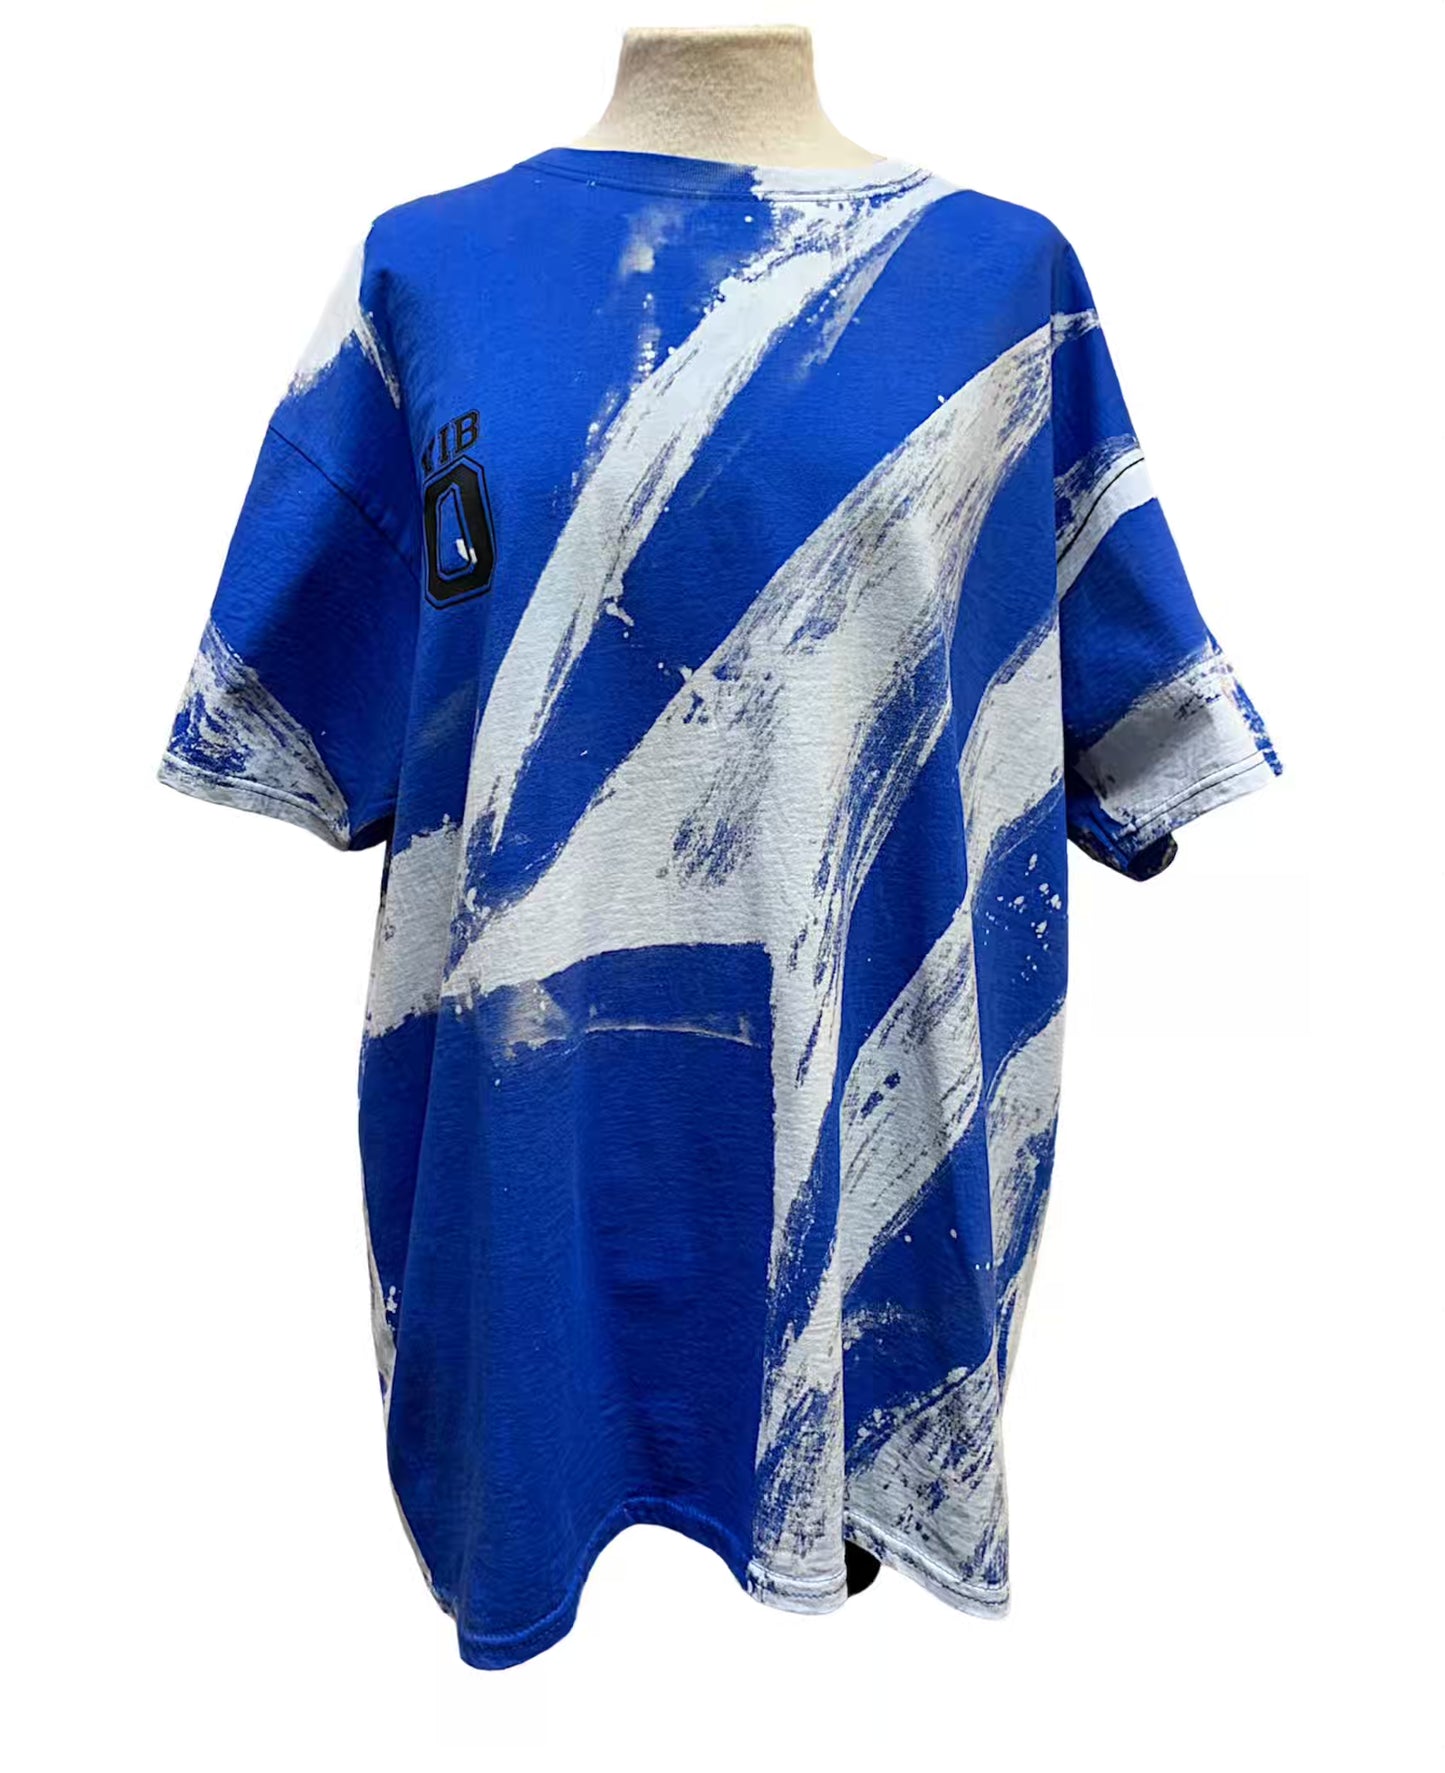 Partxis Blue XL T-shirt